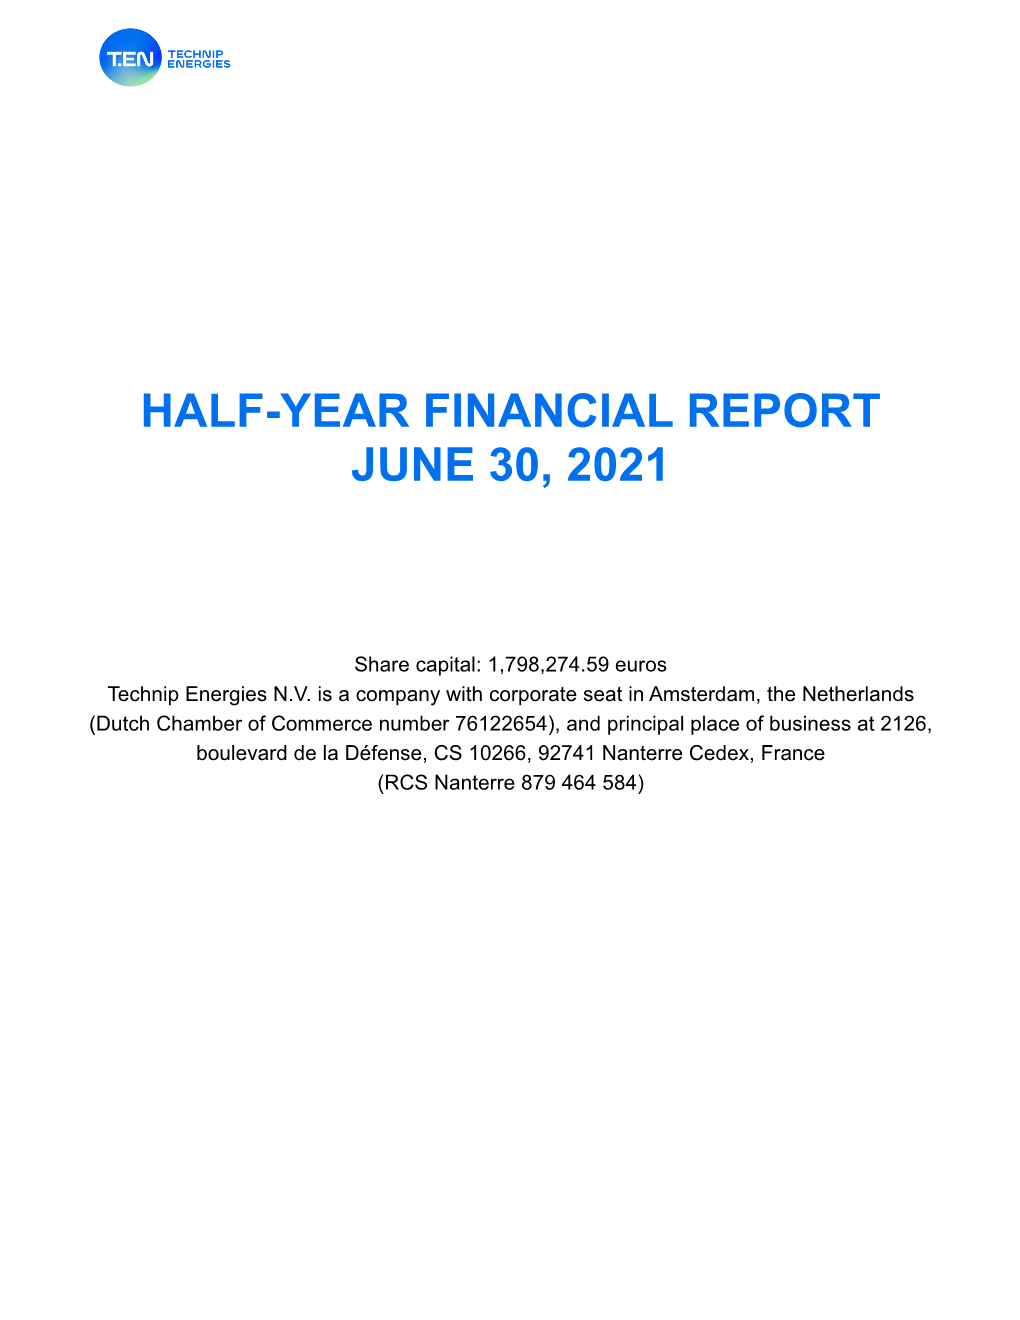 Half-Year Financial Report June 30, 2021